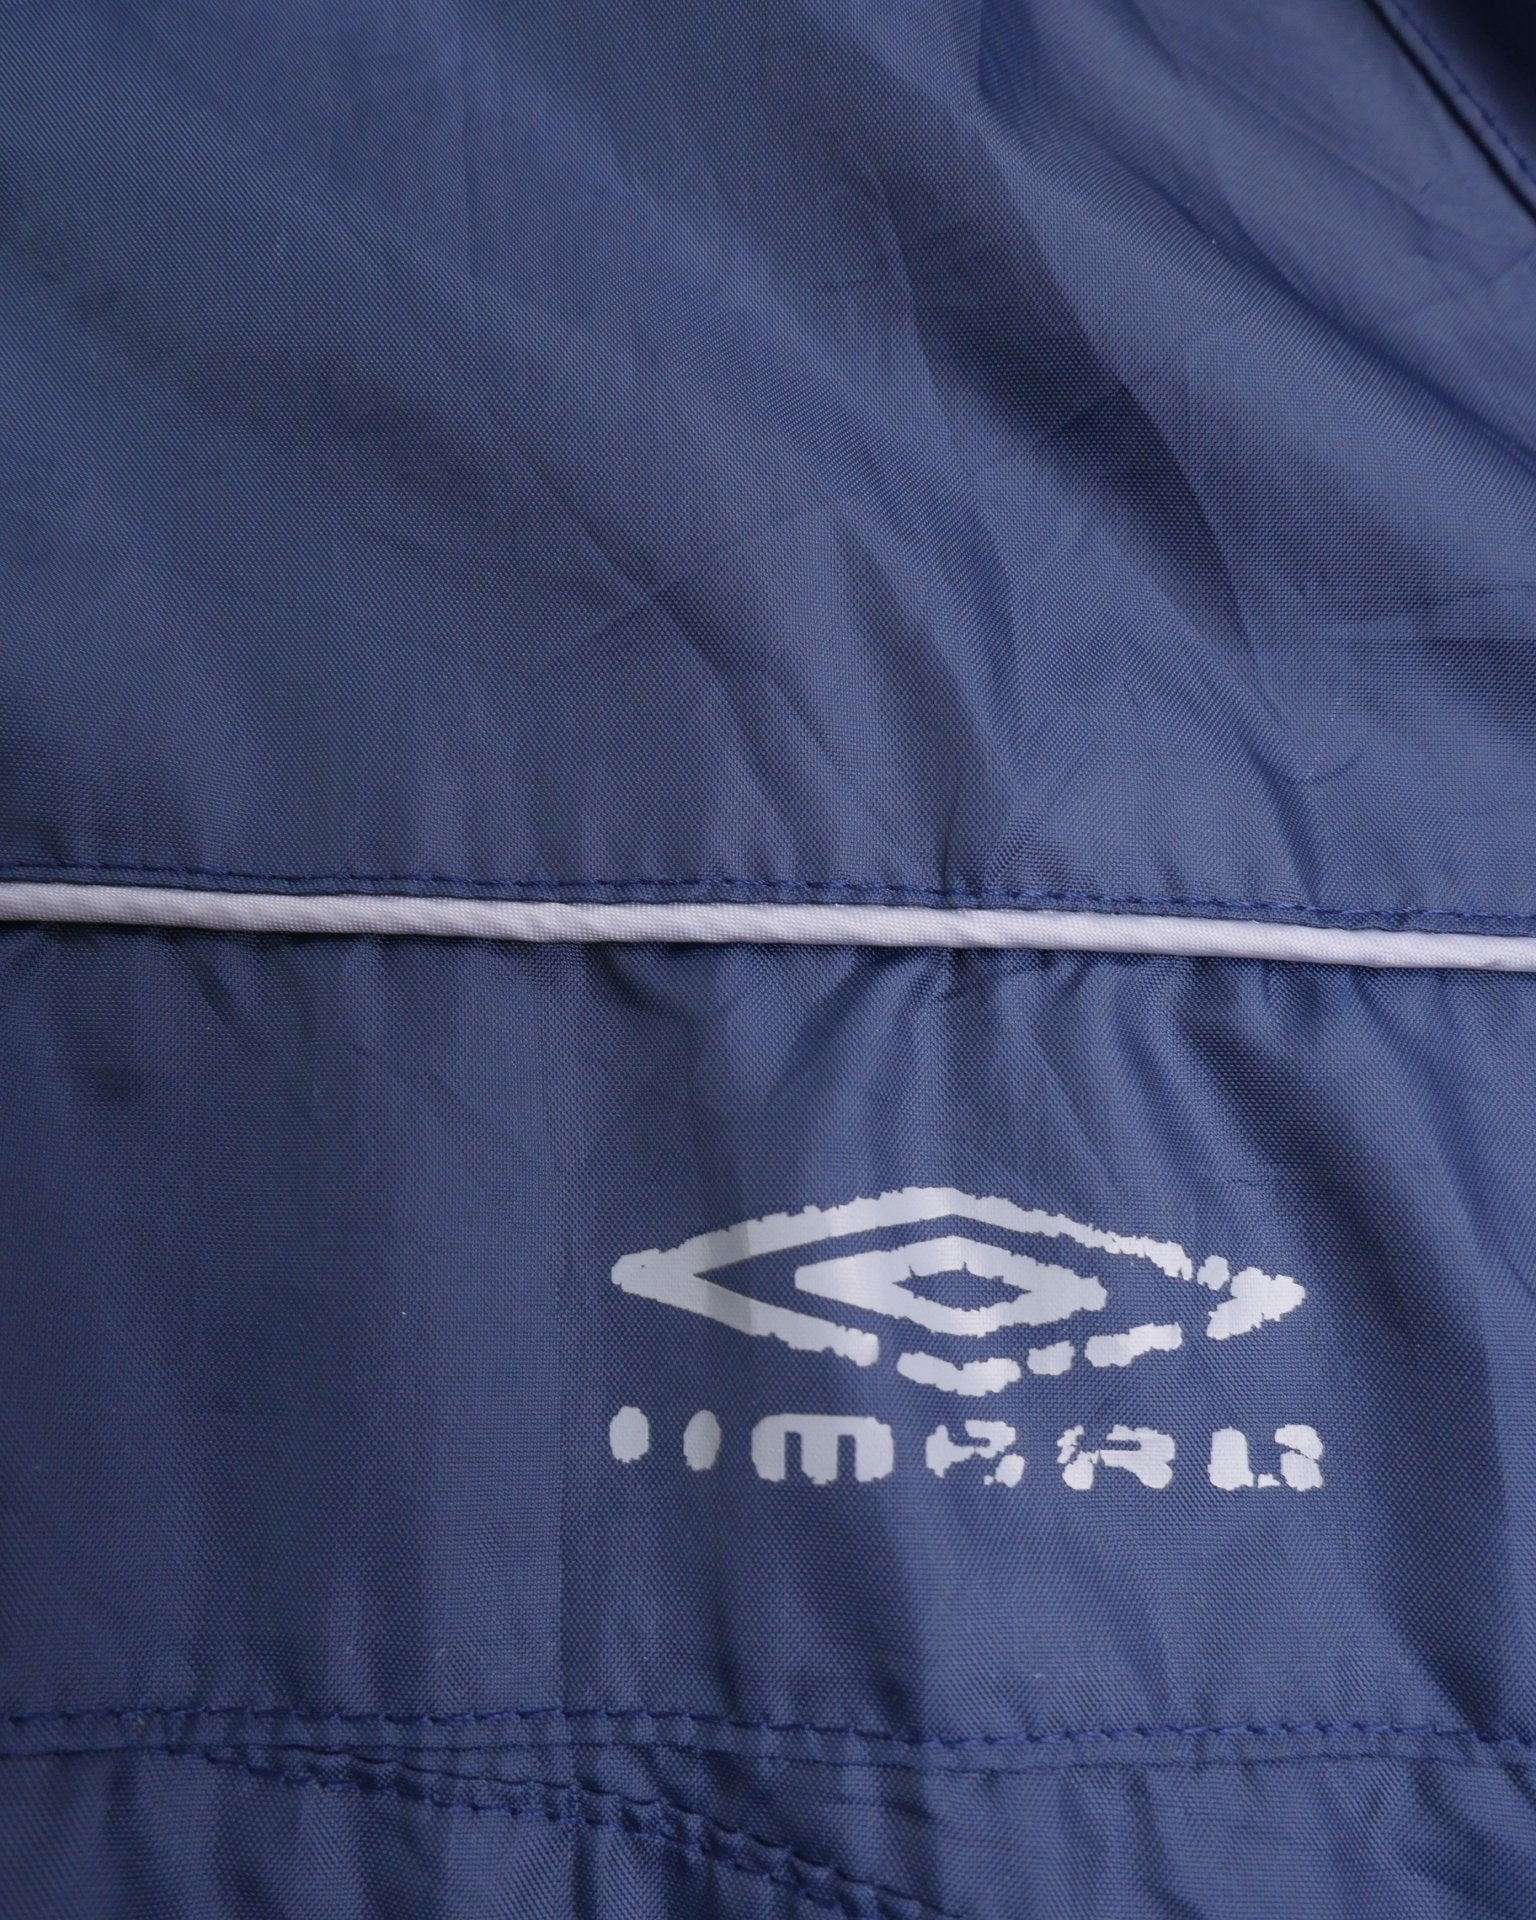 Umbro printed Logo blue Track Jacke - Peeces